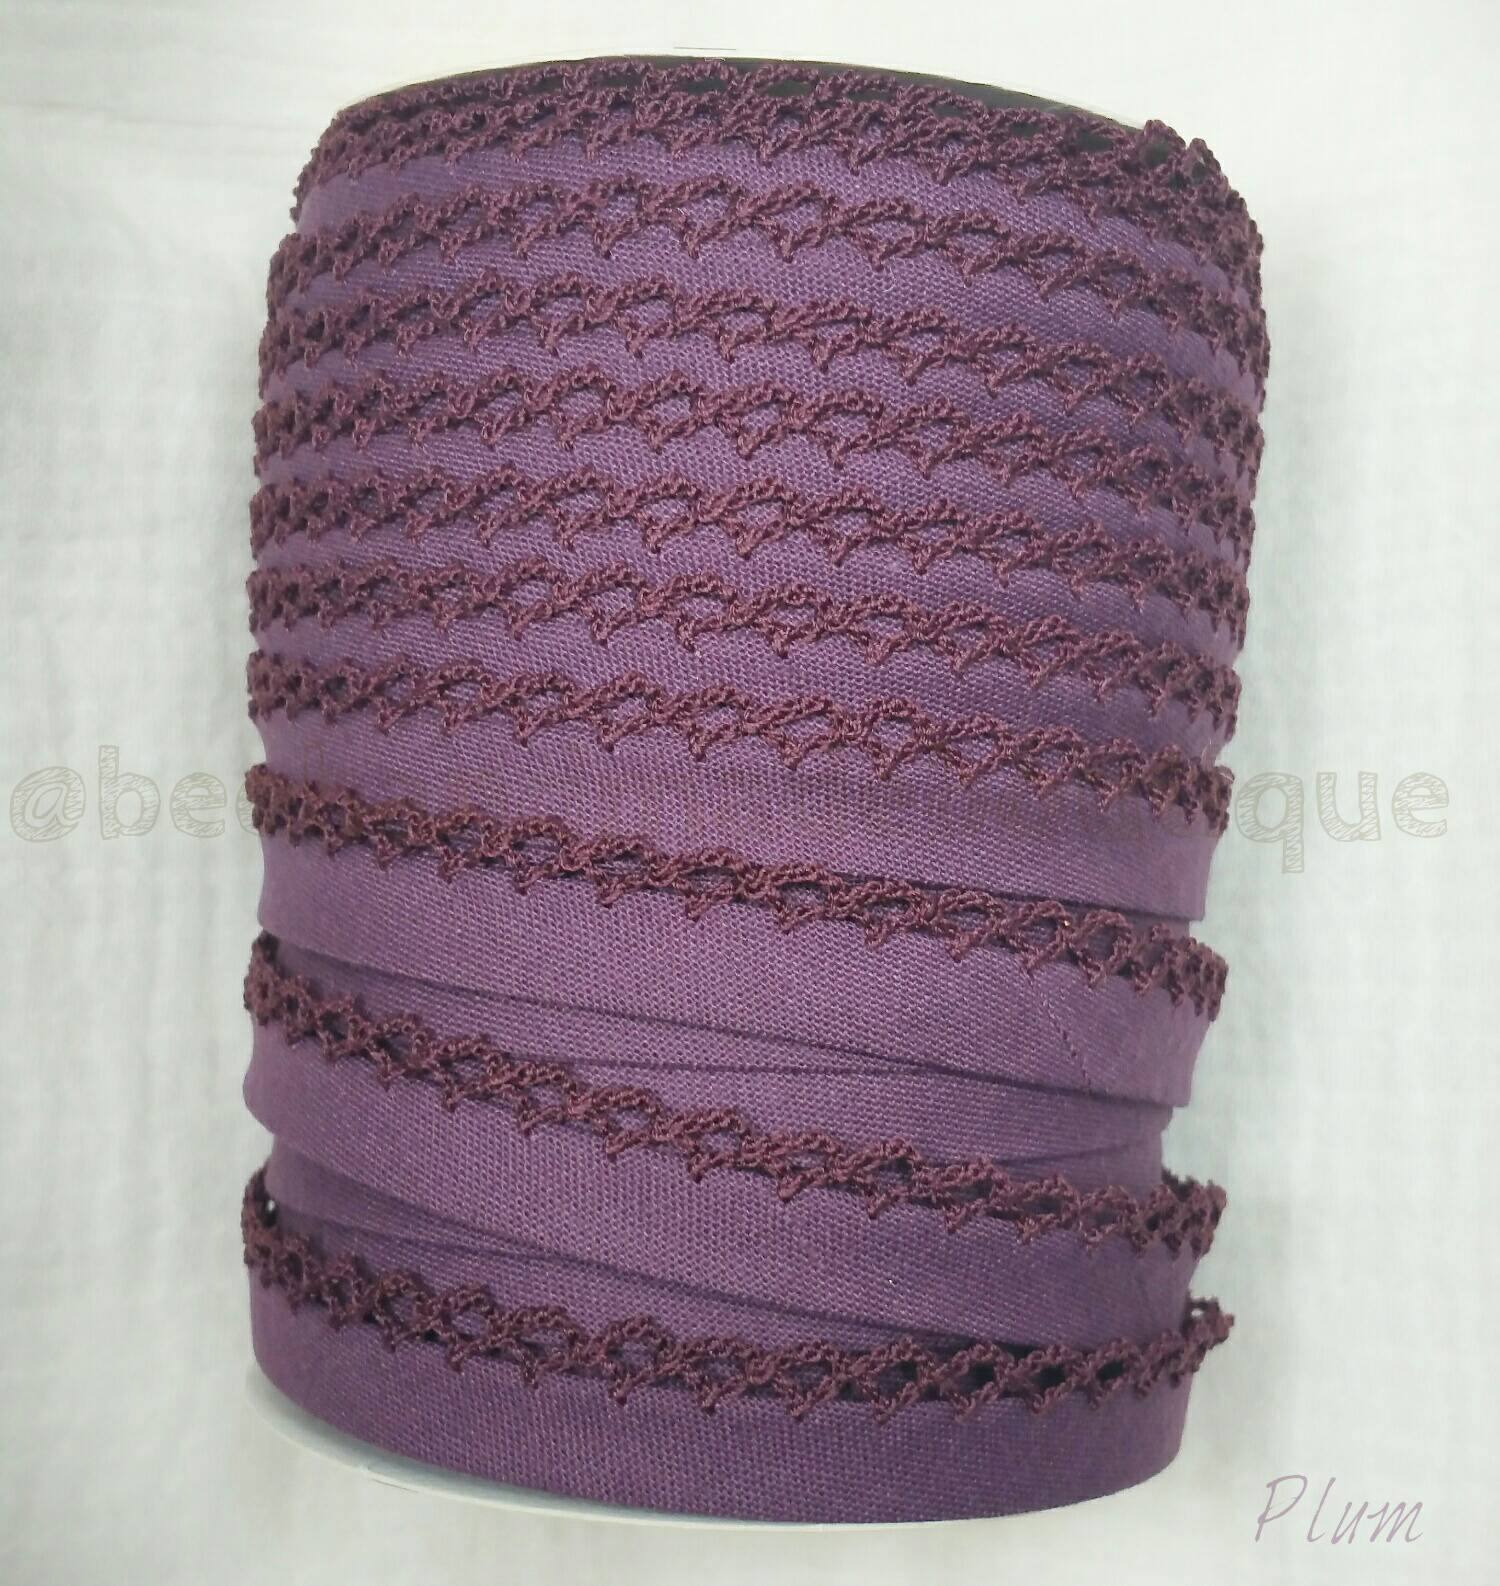 Picot Double Fold Bias Tape, Crochet Edge Bias Tape, Picot Edge, Quilt Binding, PLUM Crochet Bias Tape, By the Yard, Purple Lace, Trim